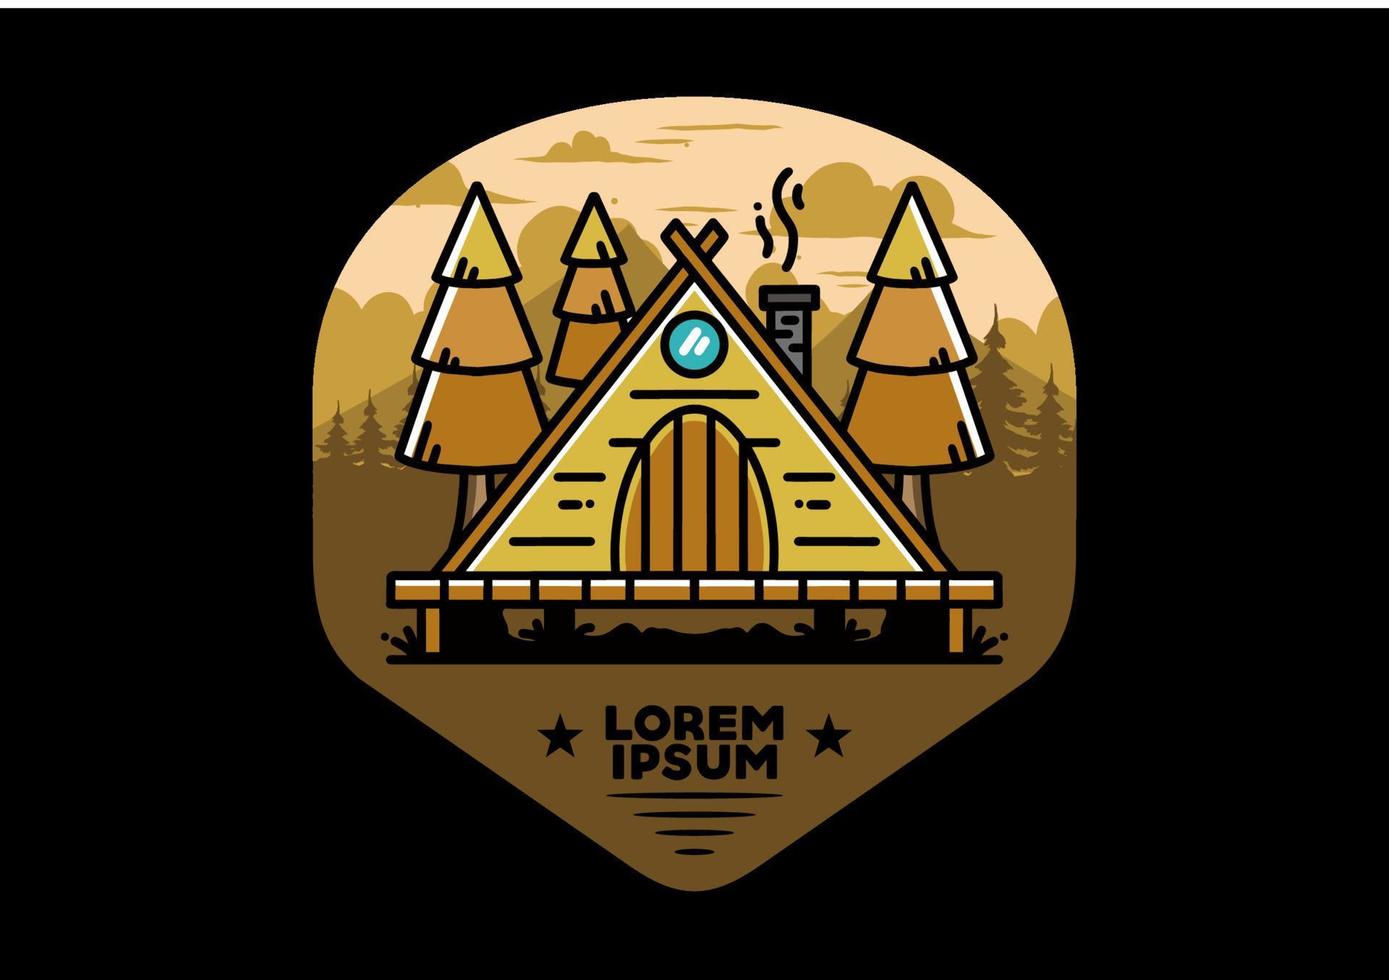 Triangle wooden cabin between pine tress illustration design vector